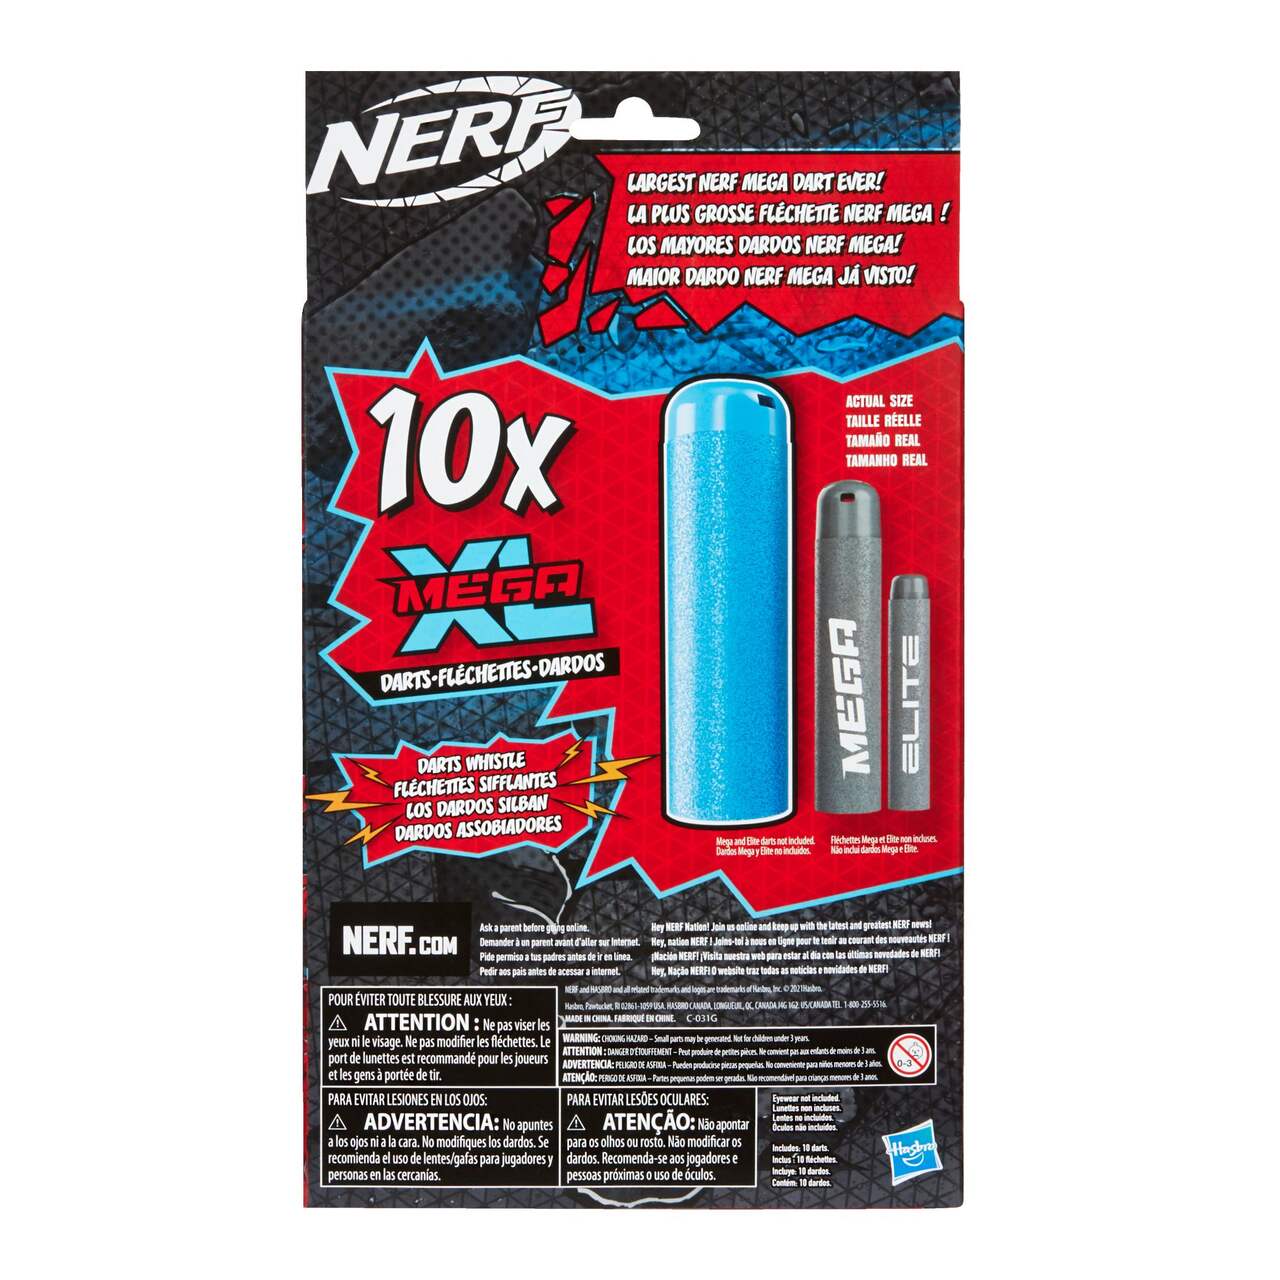 NERF Recharge 20 flechettes Nerf Élite 2.0 pas cher 